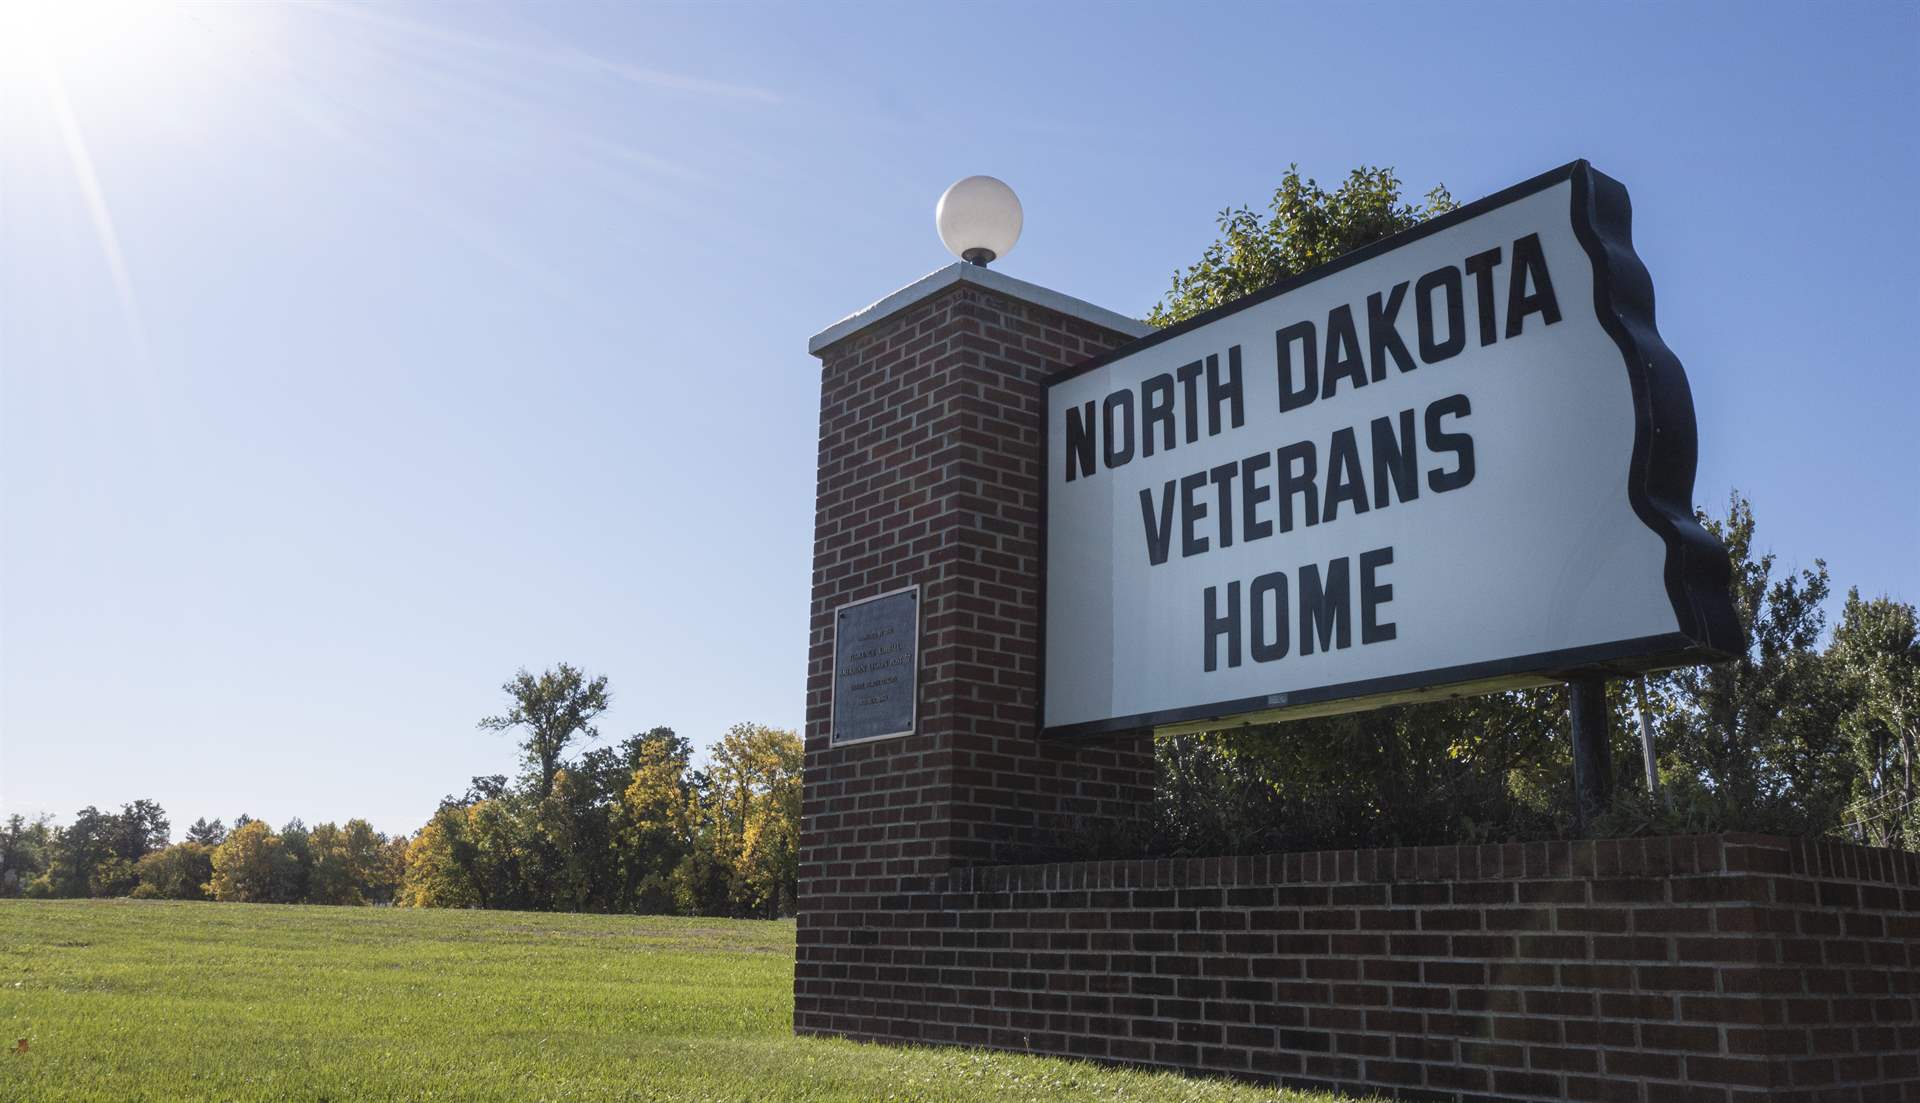 The sign for the North Dakota Veterans Home.